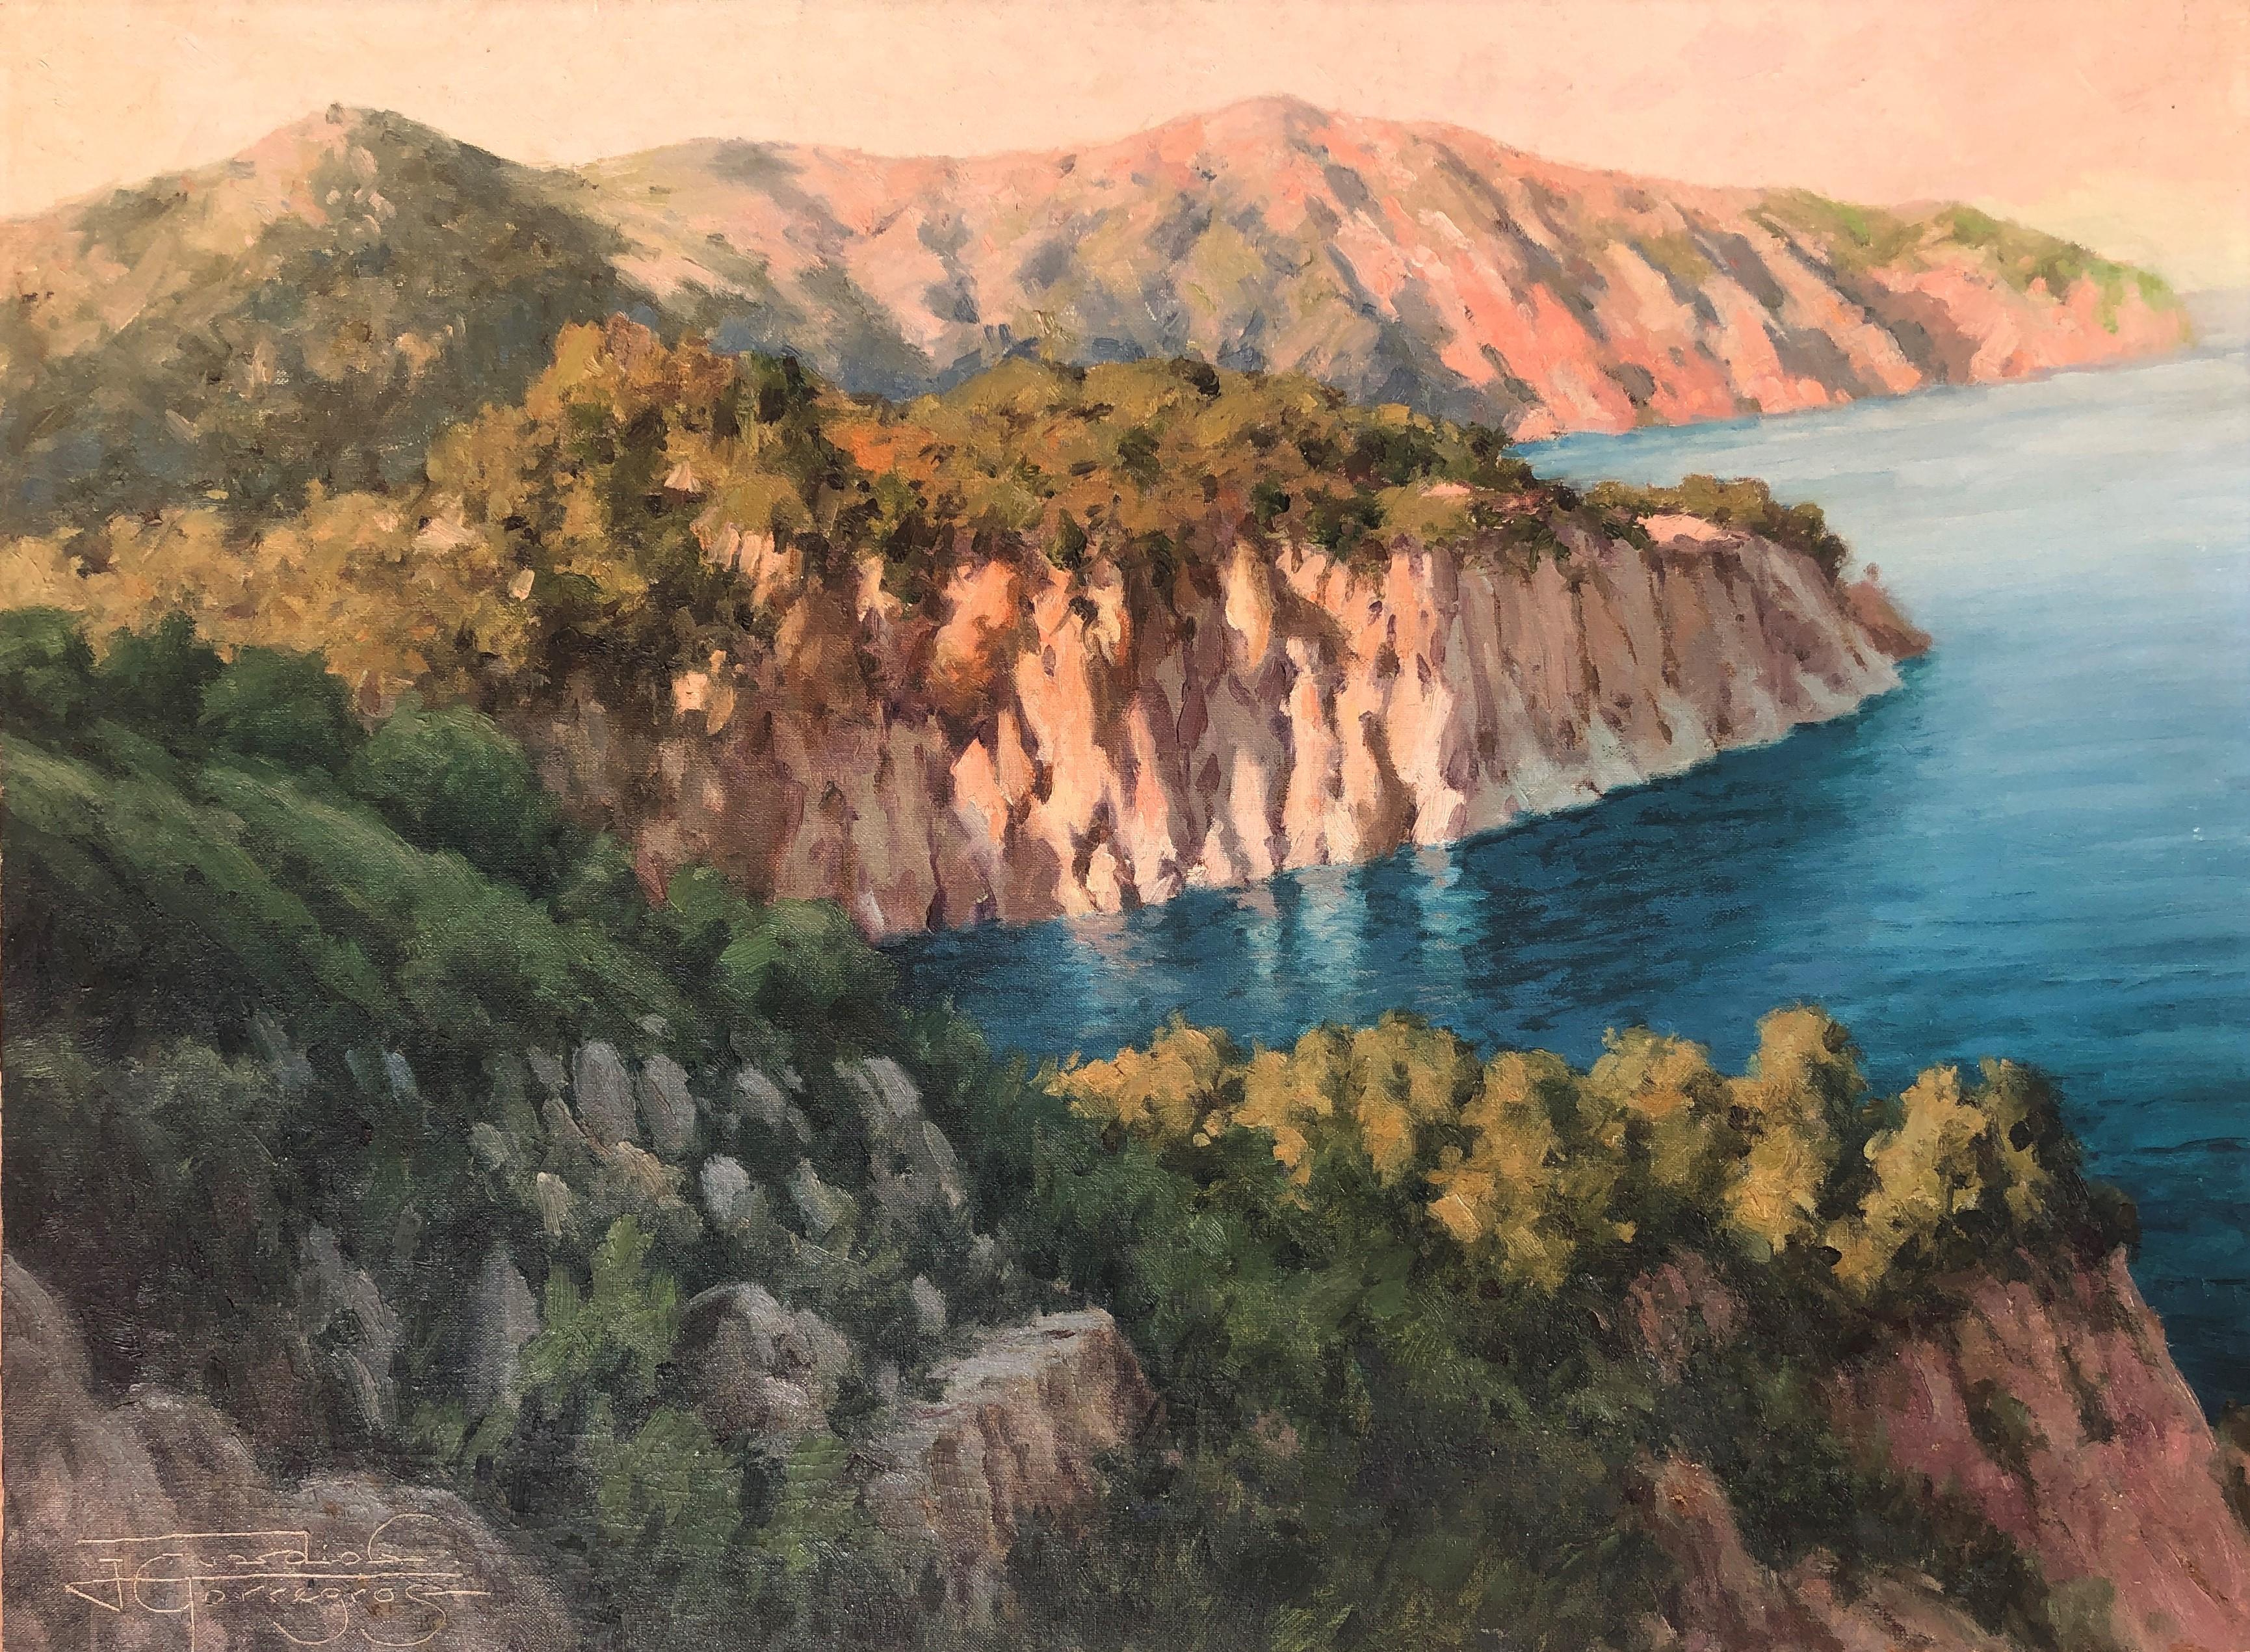 Josep Guardiola Torregrossa Landscape Painting - Begur Costa Brava Spanish seascape oil on canvas painting